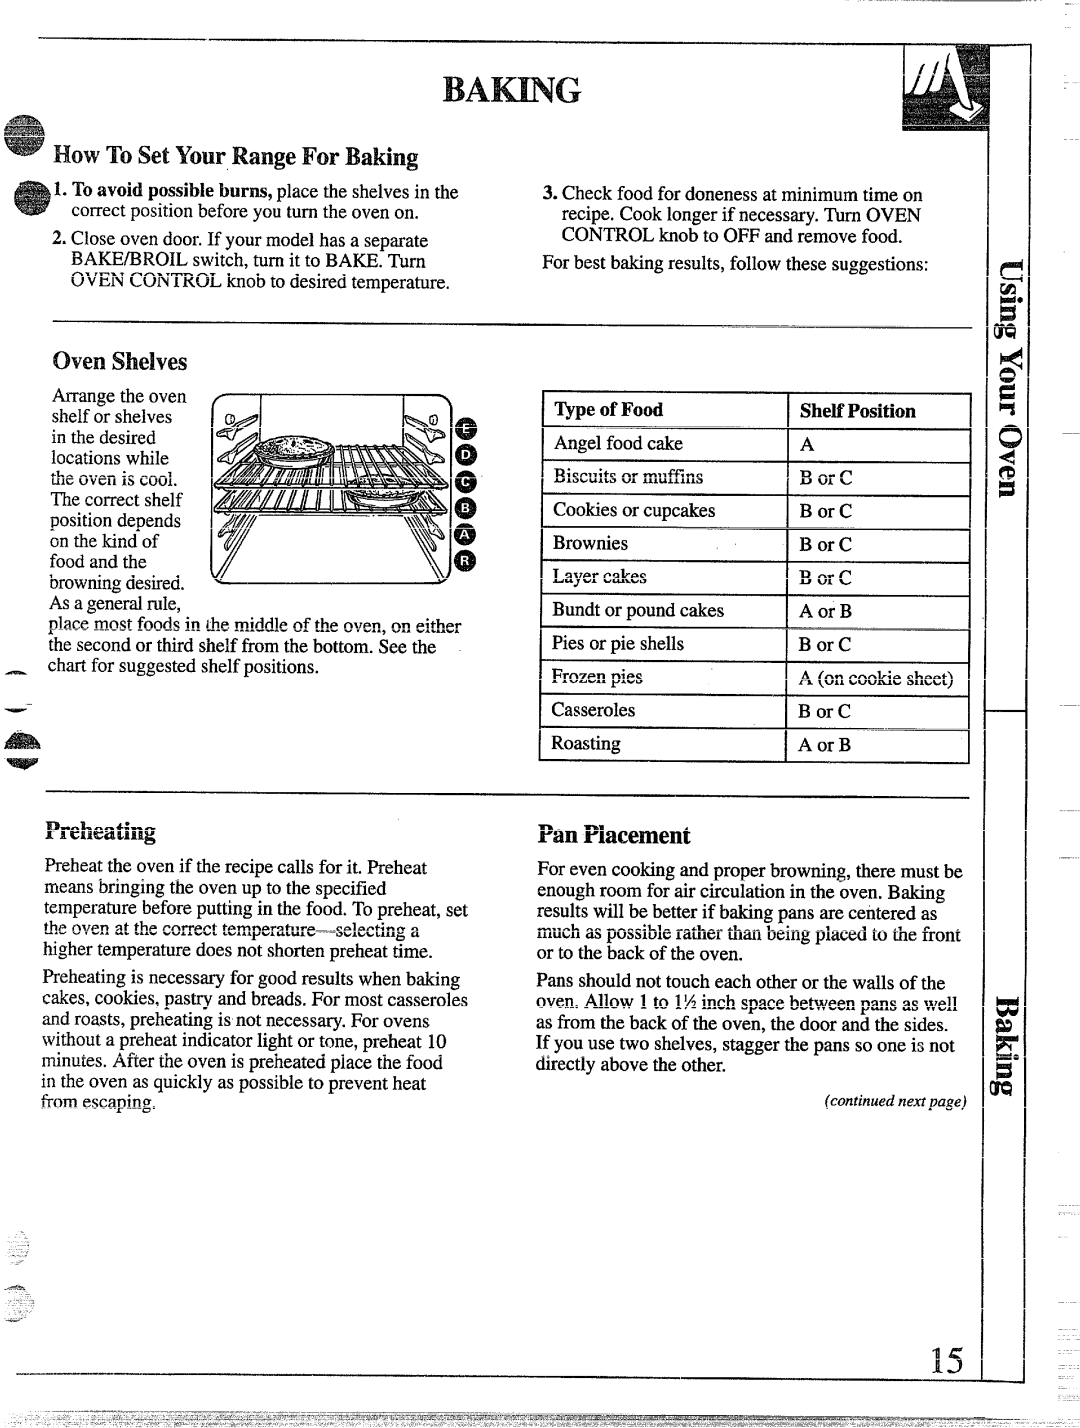 GE 49-8338 installation instructions = How To setYour Range For Bating, Ovenshelves 